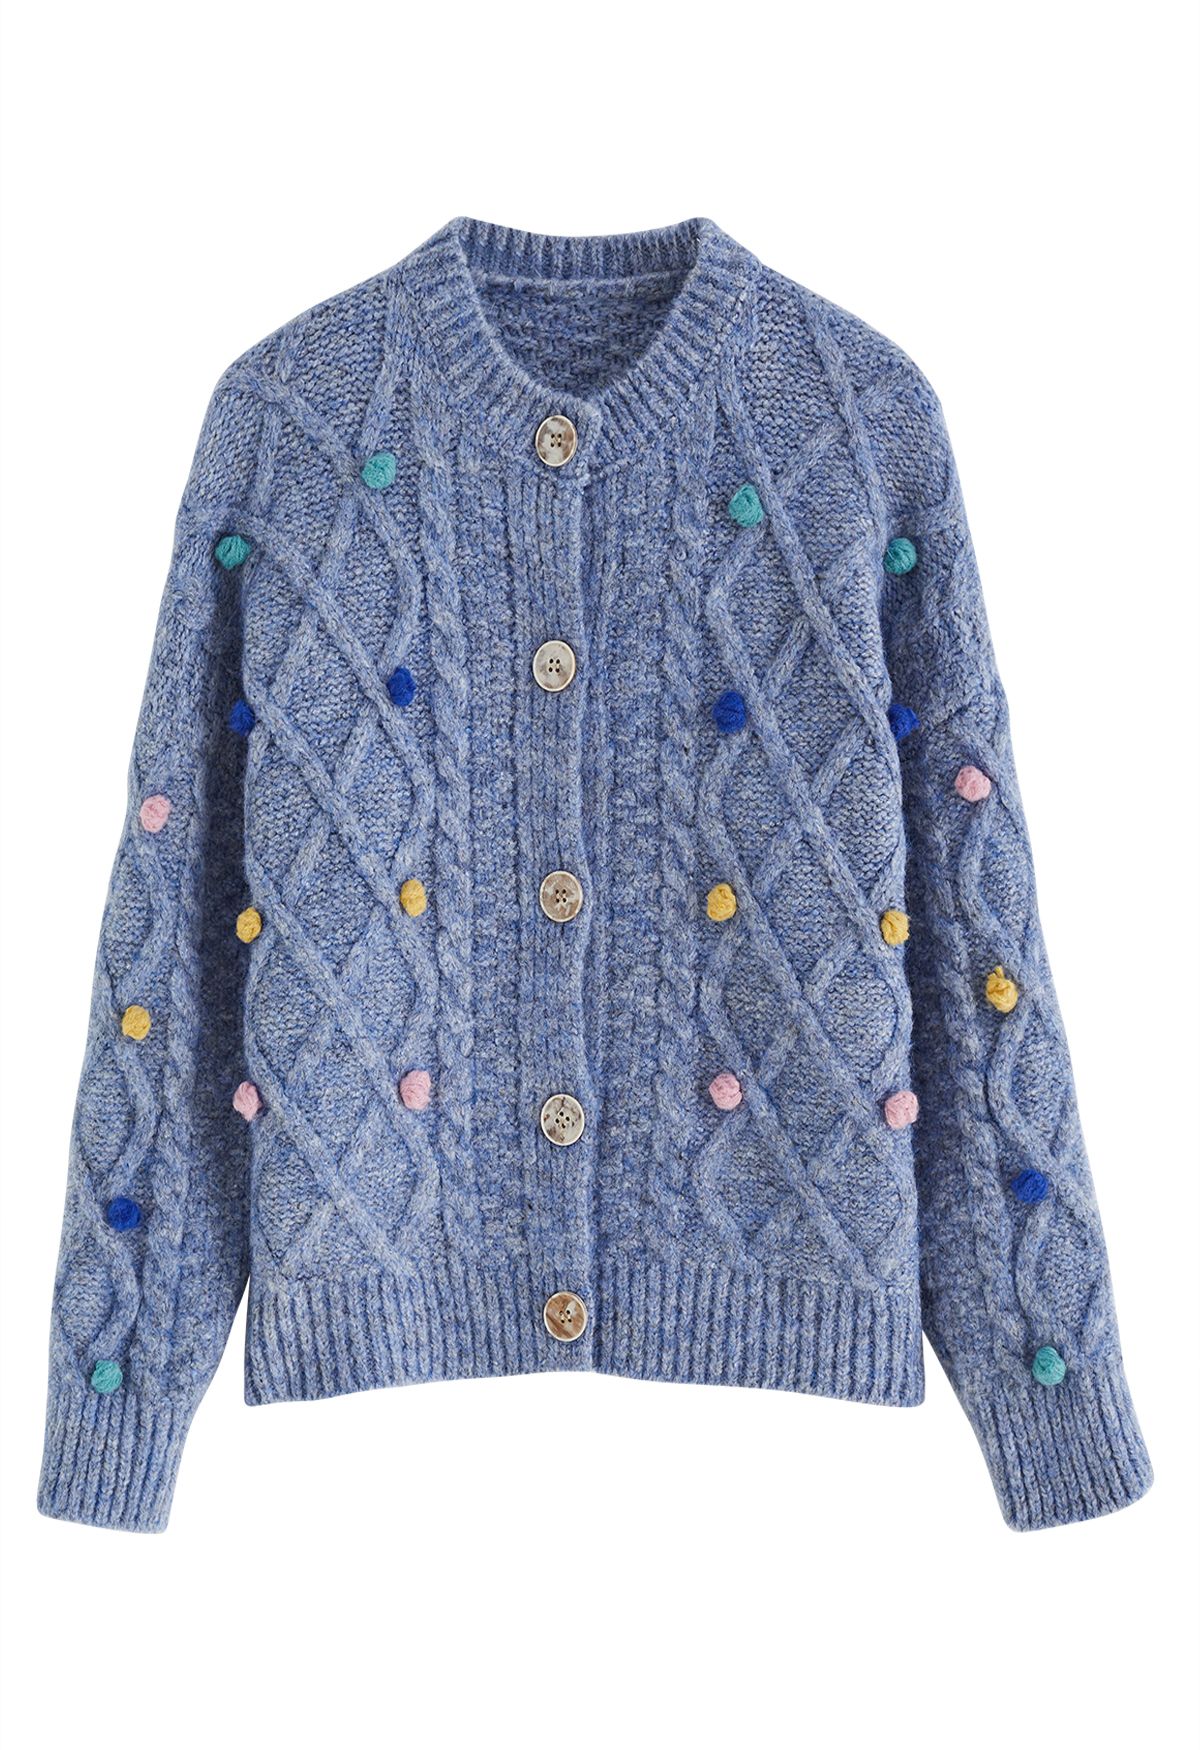 Colorful Pom-Pom Diamond Knit Cardigan in Blue - Retro, Indie and ...